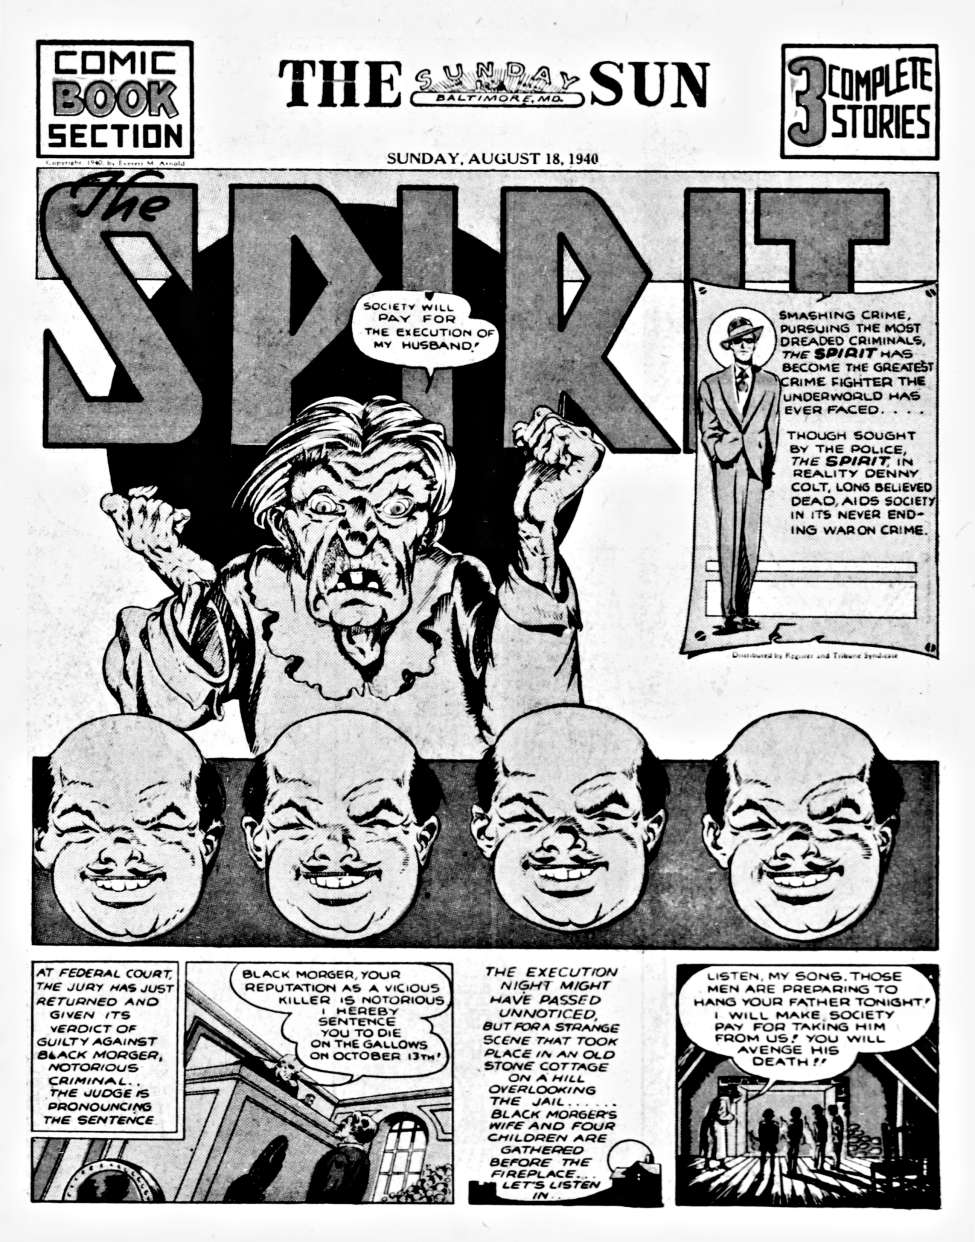 Book Cover For The Spirit (1940-08-18) - Baltimore Sun (b/w)